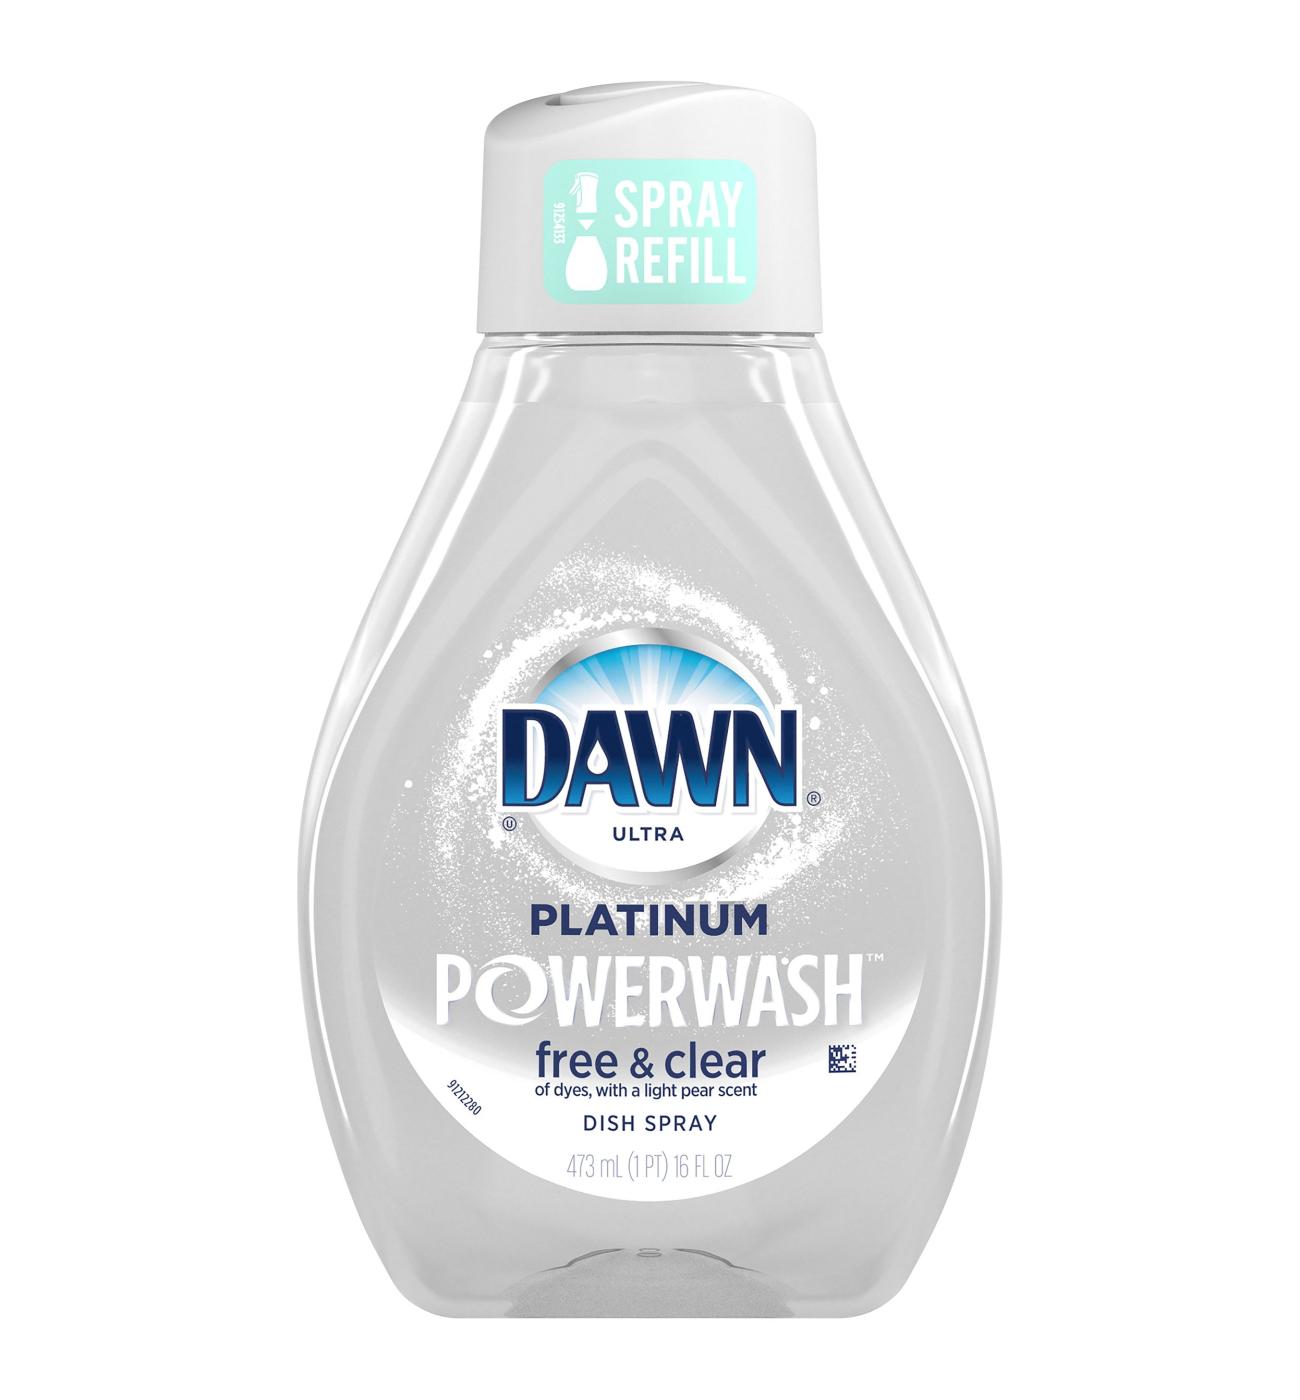 Dawn Platinum Powerwash Free & Clear Dish Spray Refill; image 1 of 3